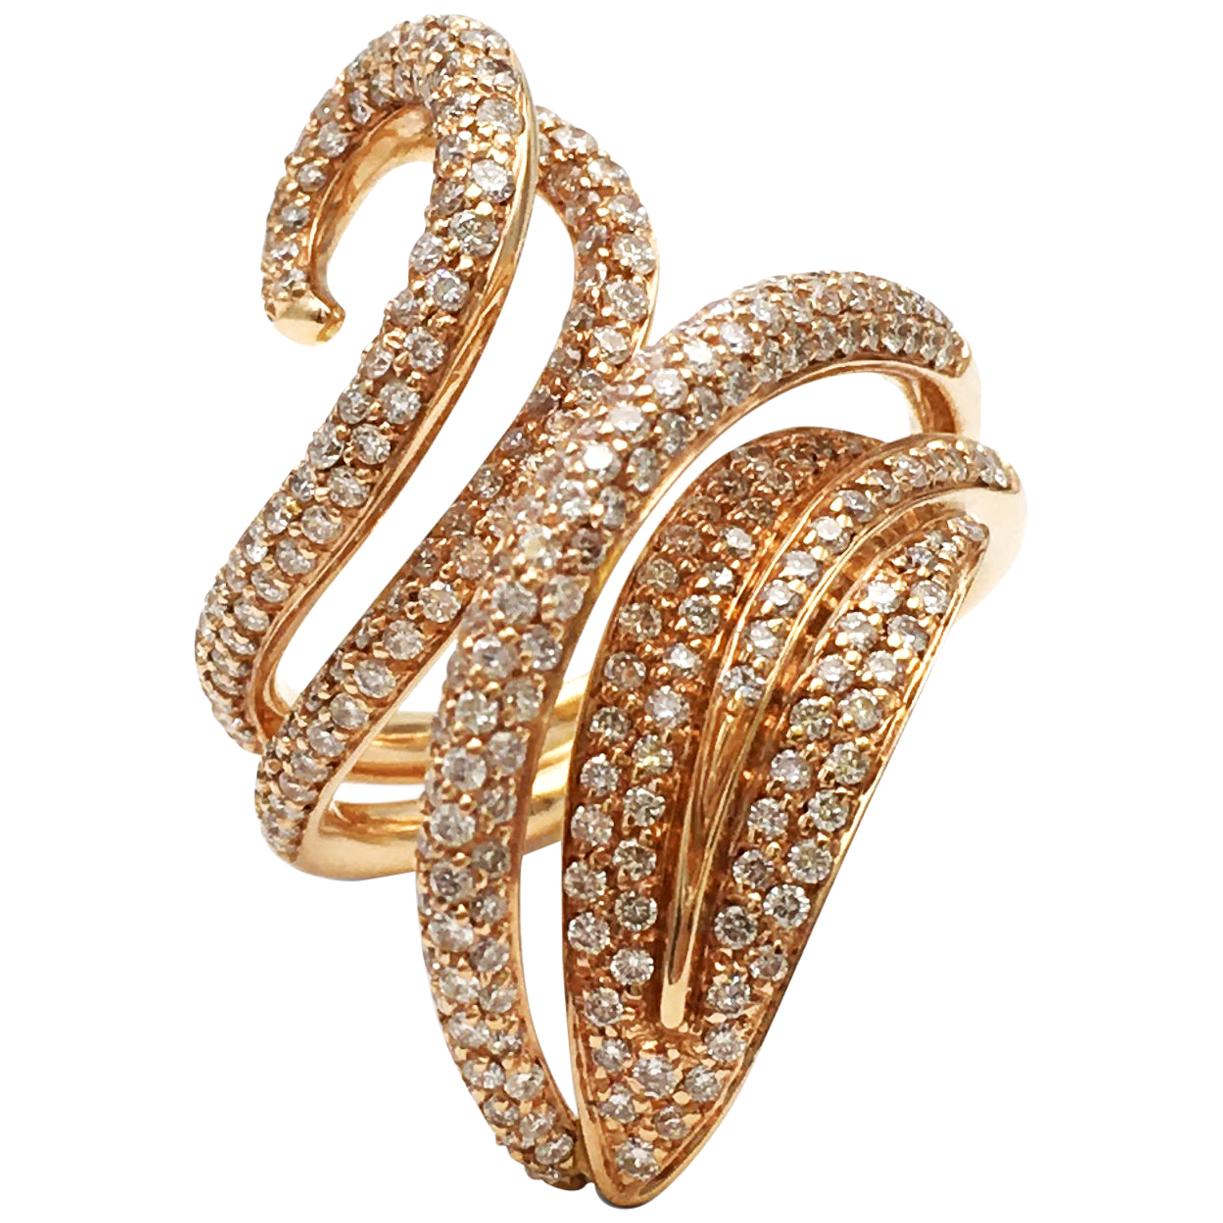 Giovanni Ferraris Rose Gold and Diamond Ring